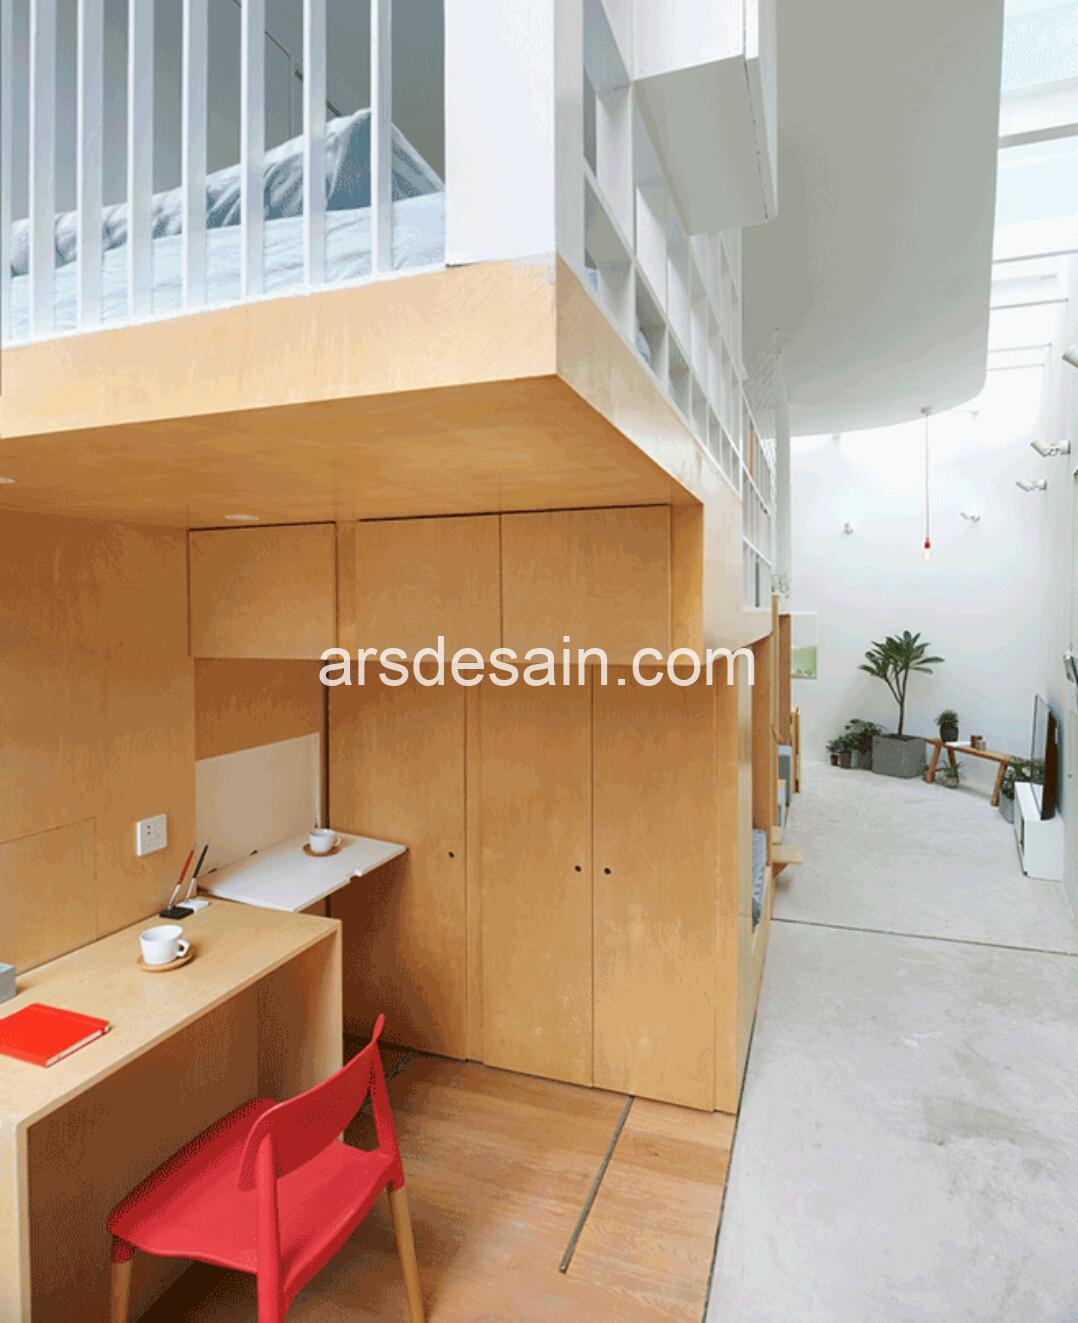 rumah minimalis modern fungsional 02